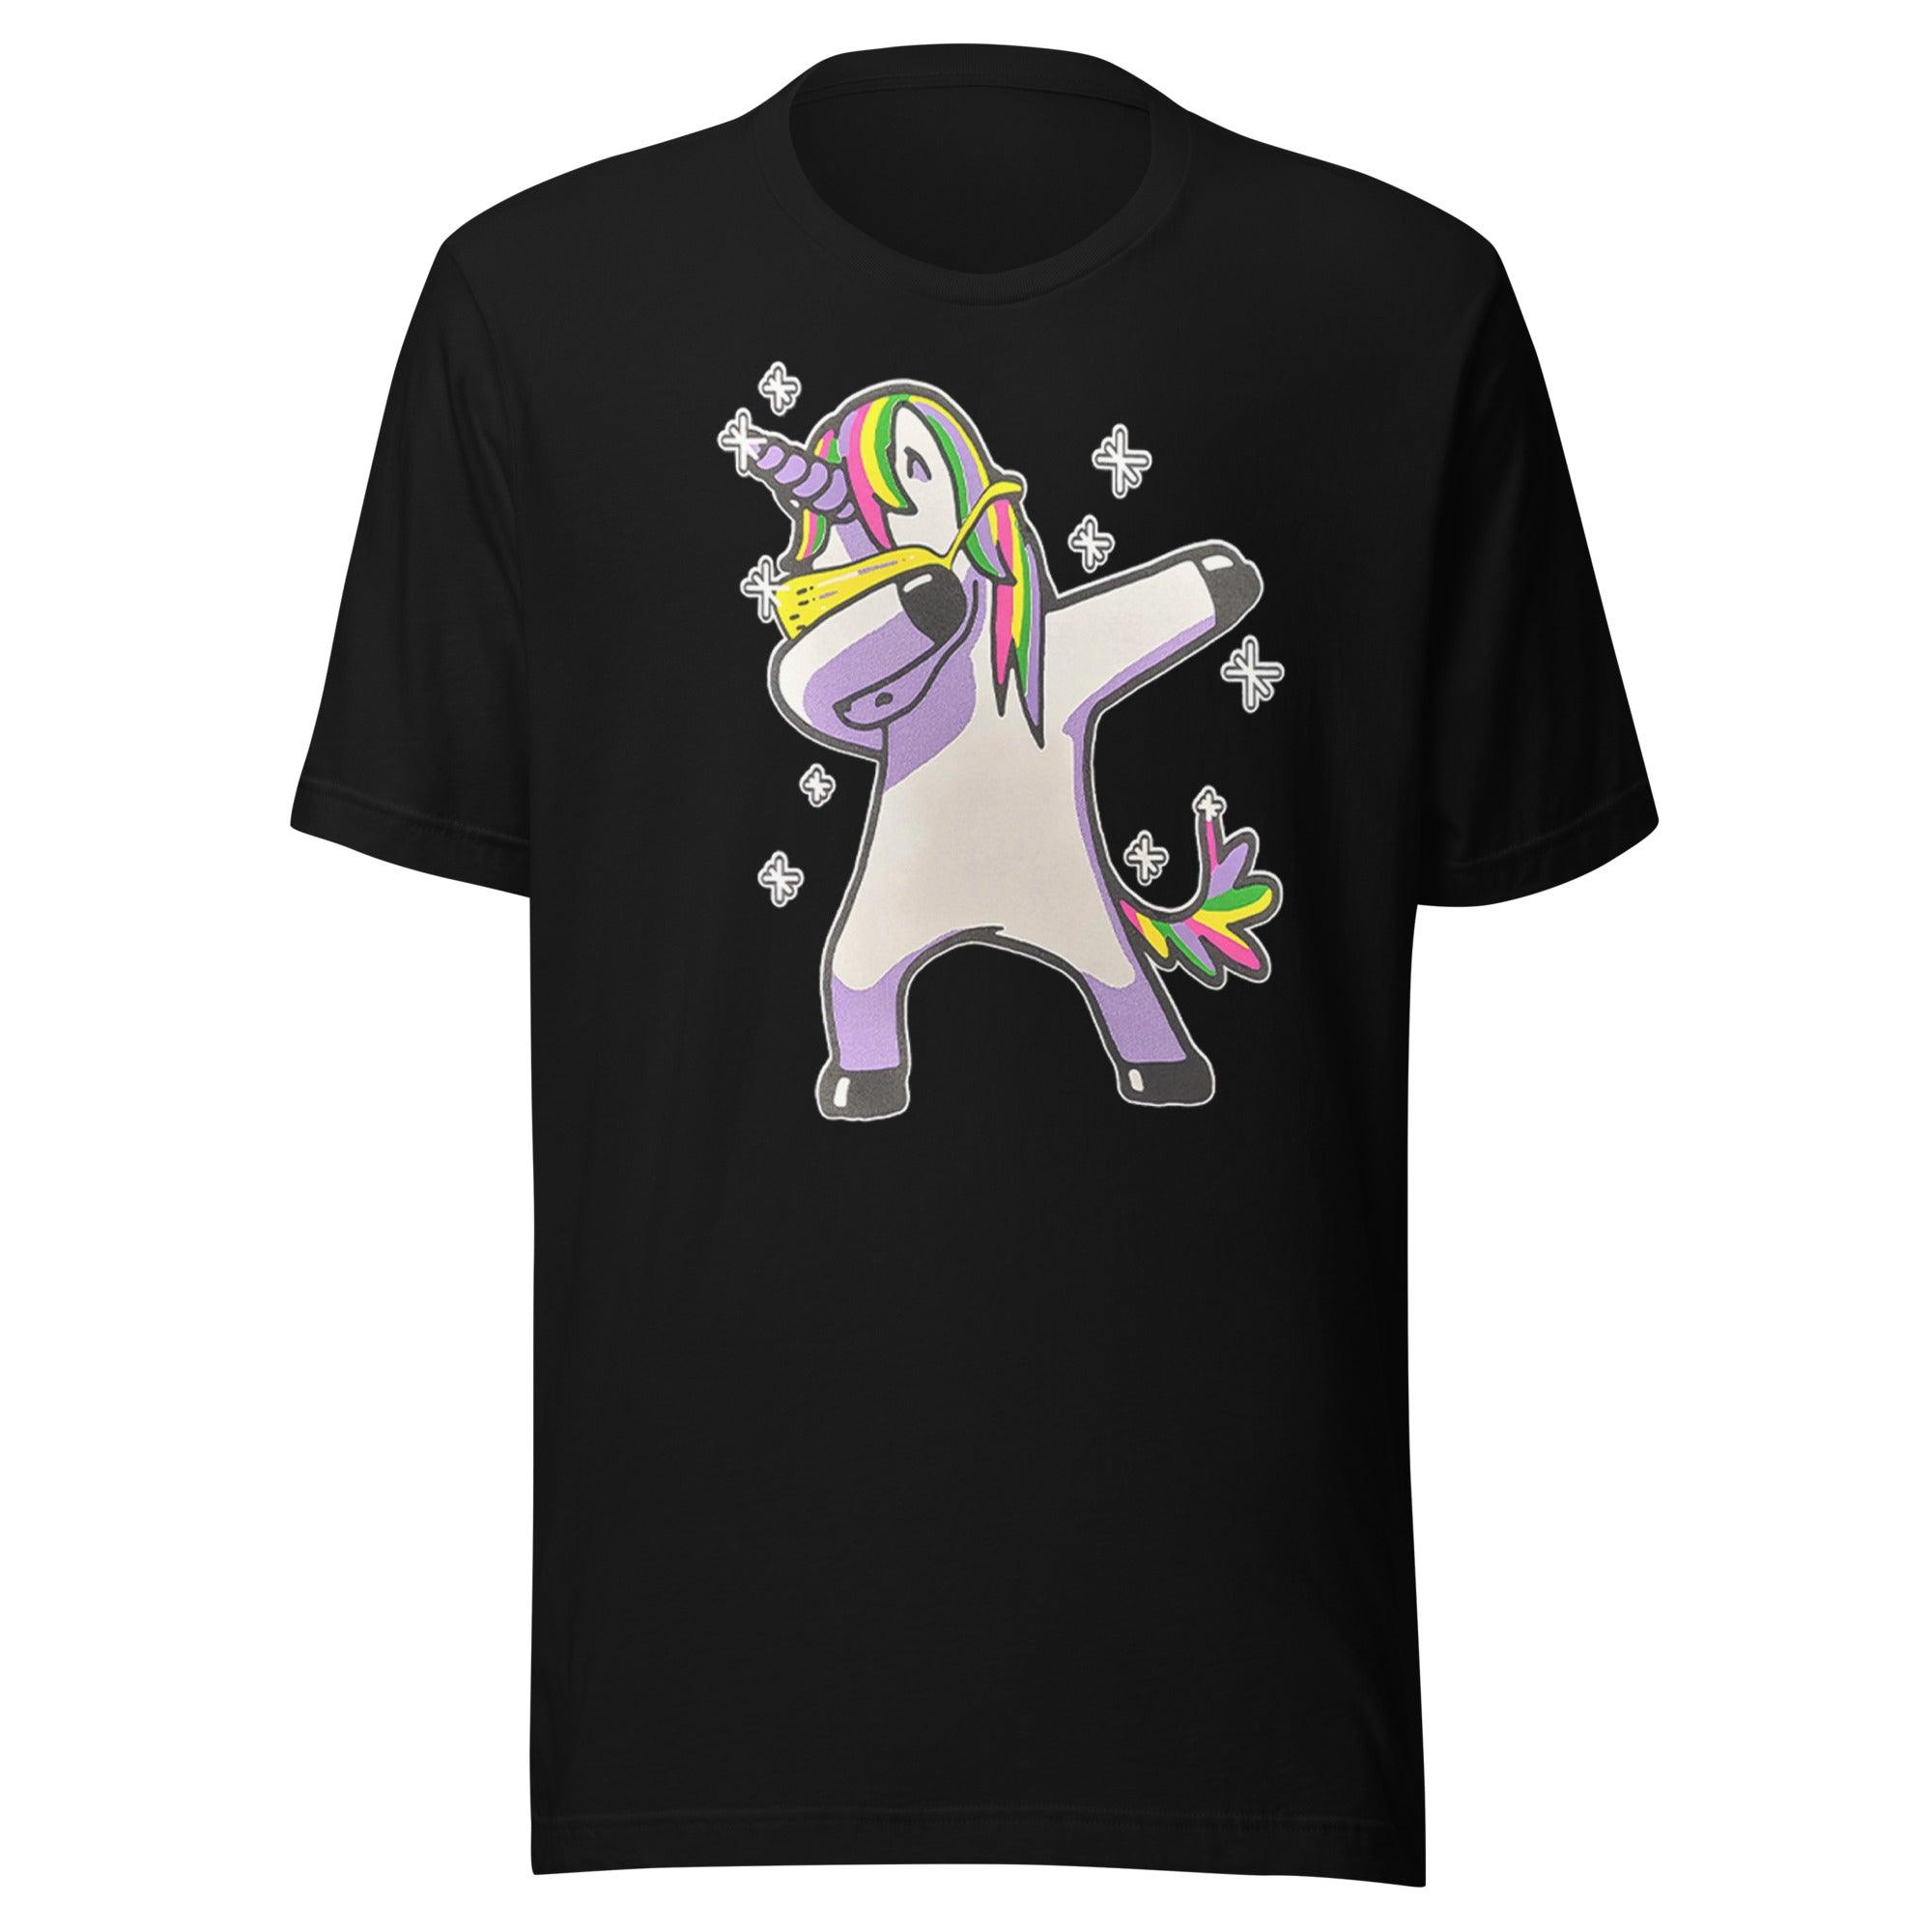 Tic Toc T-shirt Dabbing Rainbow Unicorn Short Sleeve Unisex Top